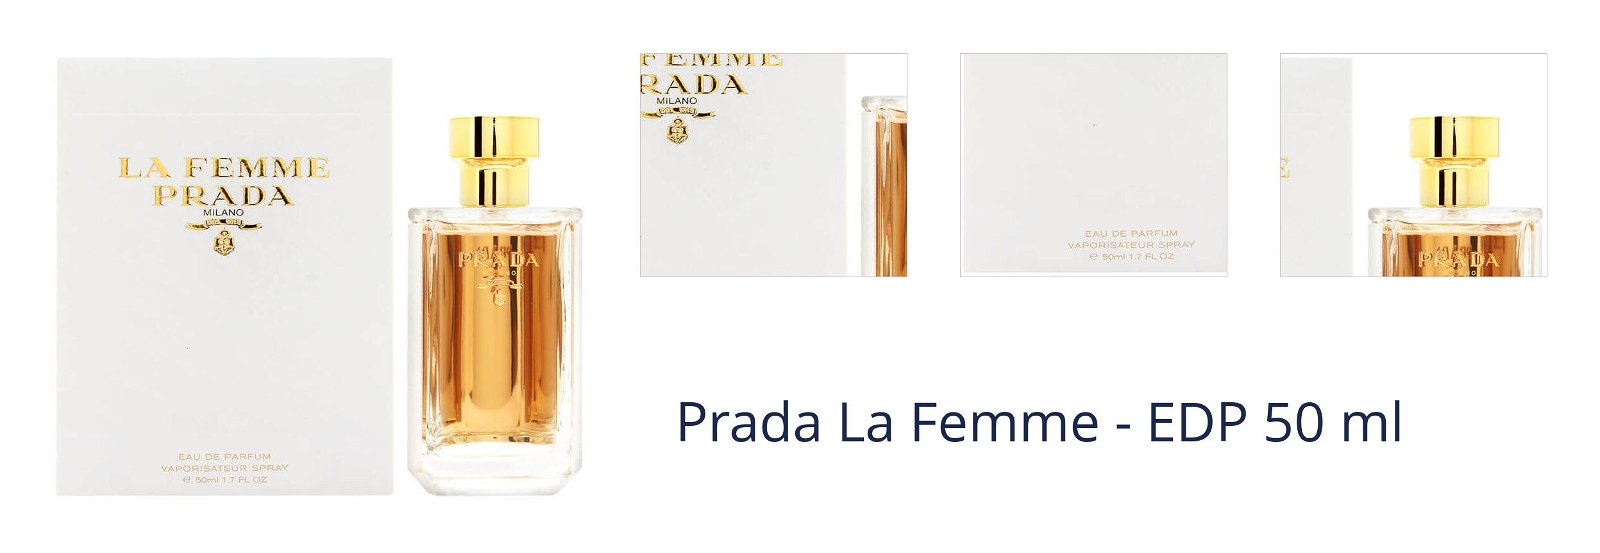 Prada La Femme - EDP 50 ml 1